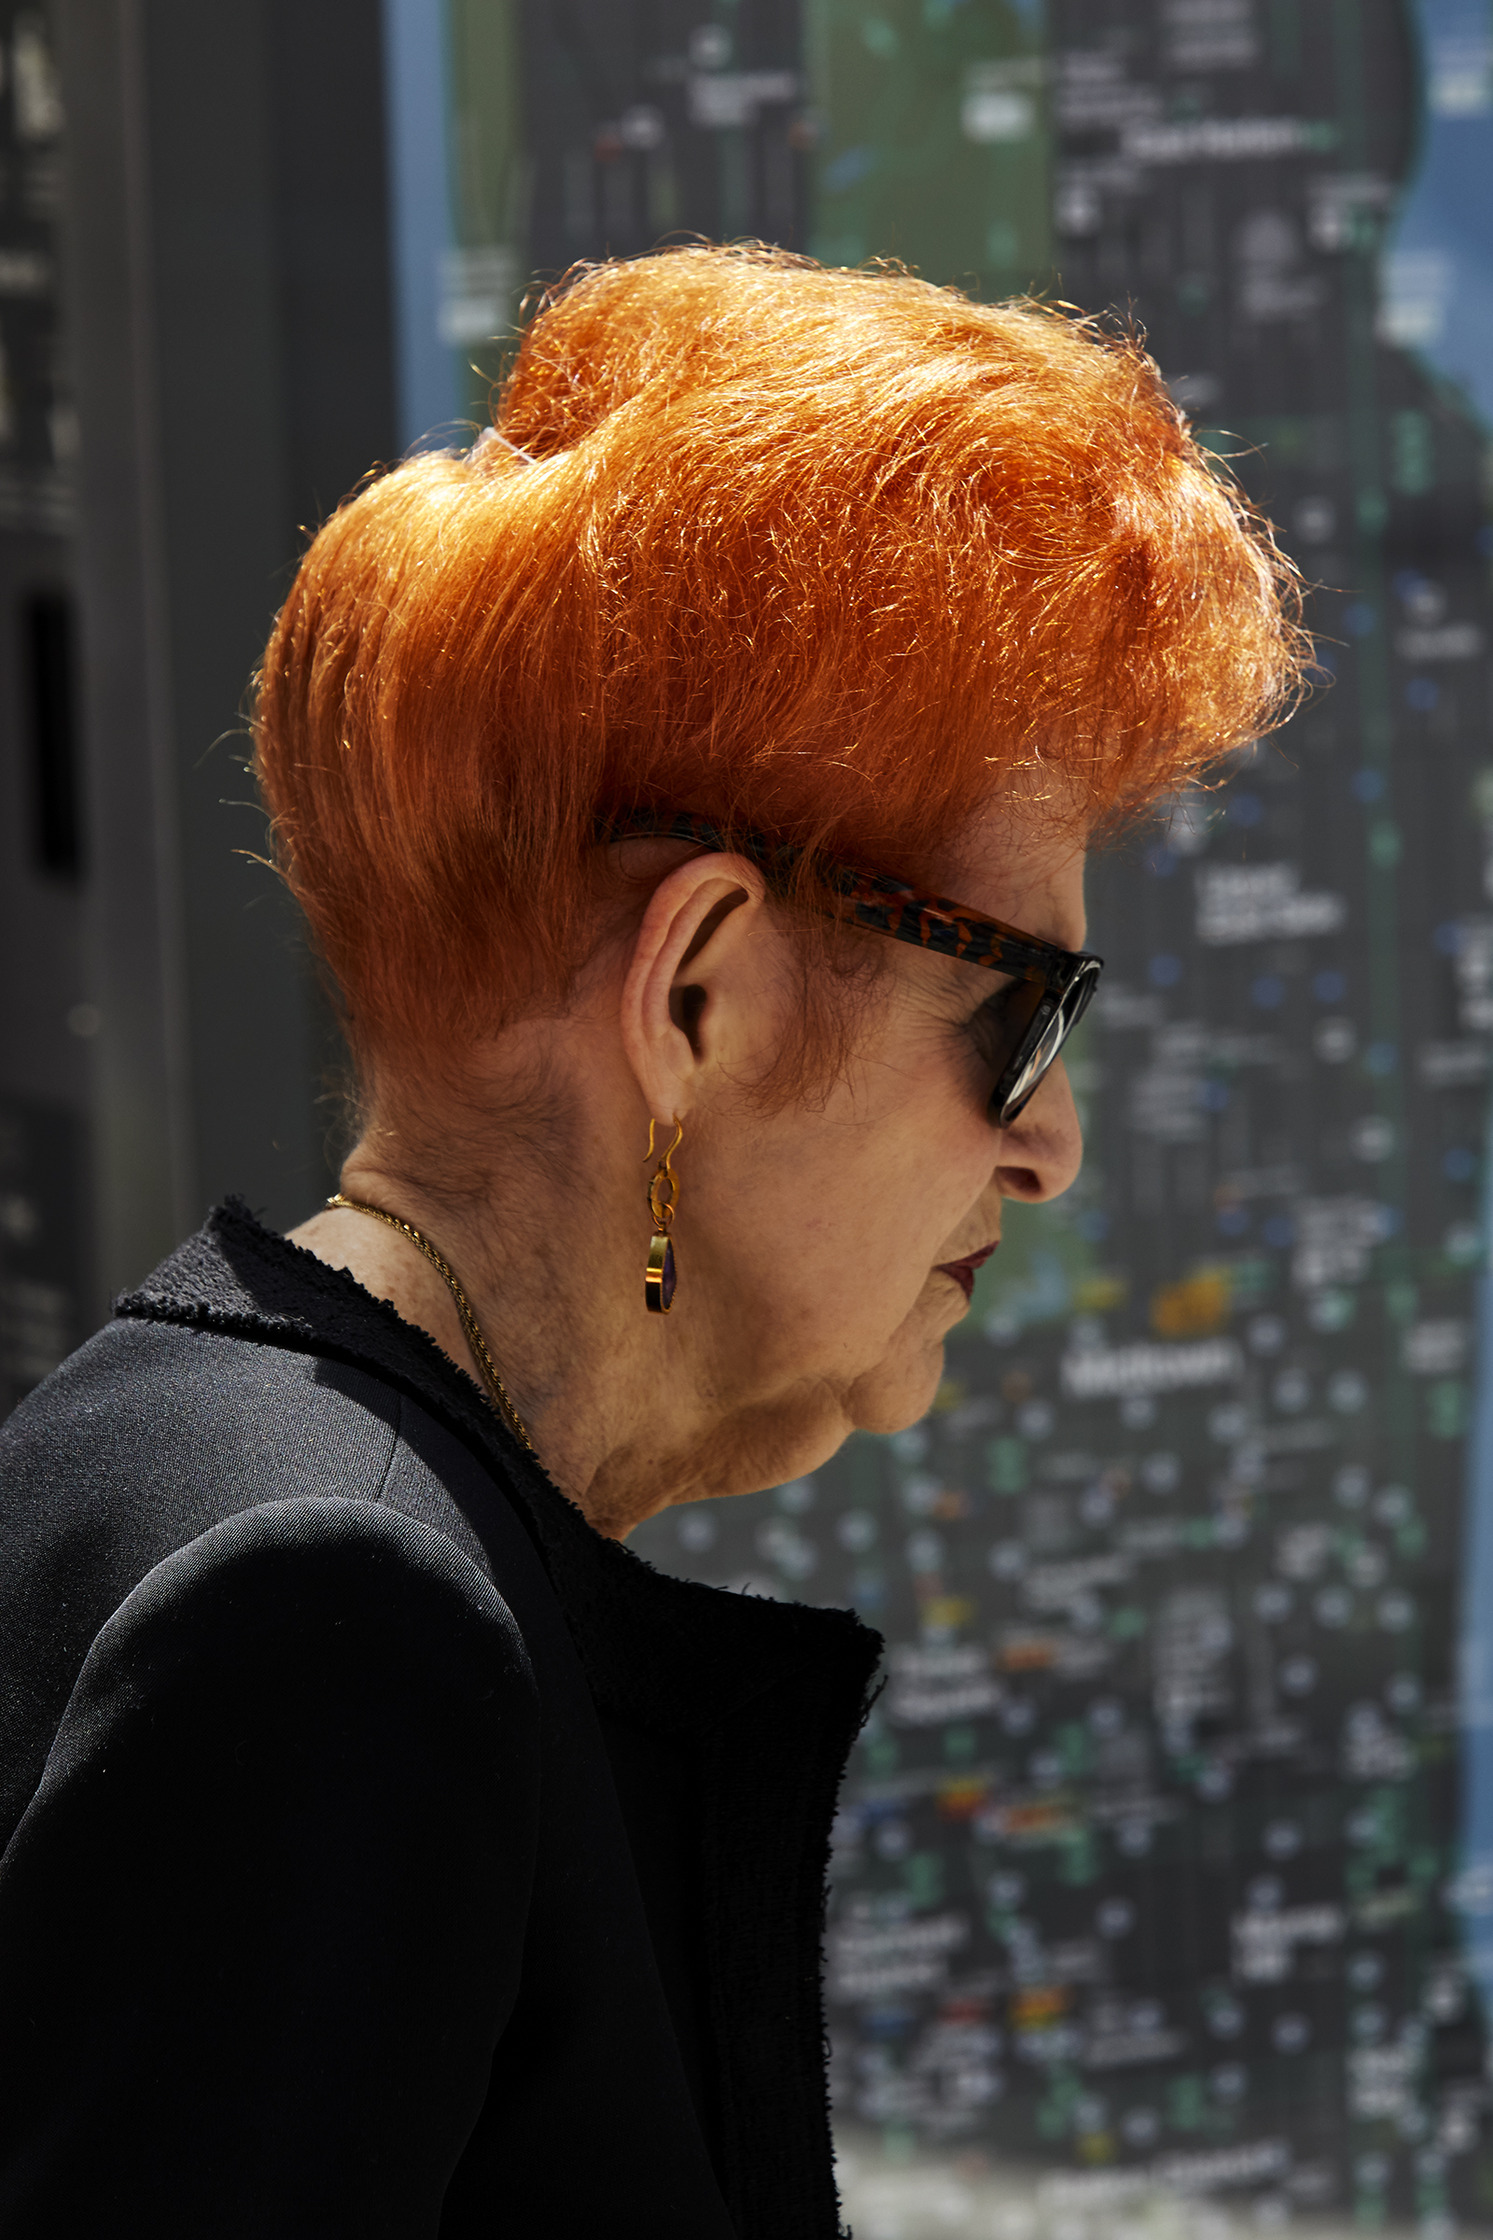 a woman with orange hair